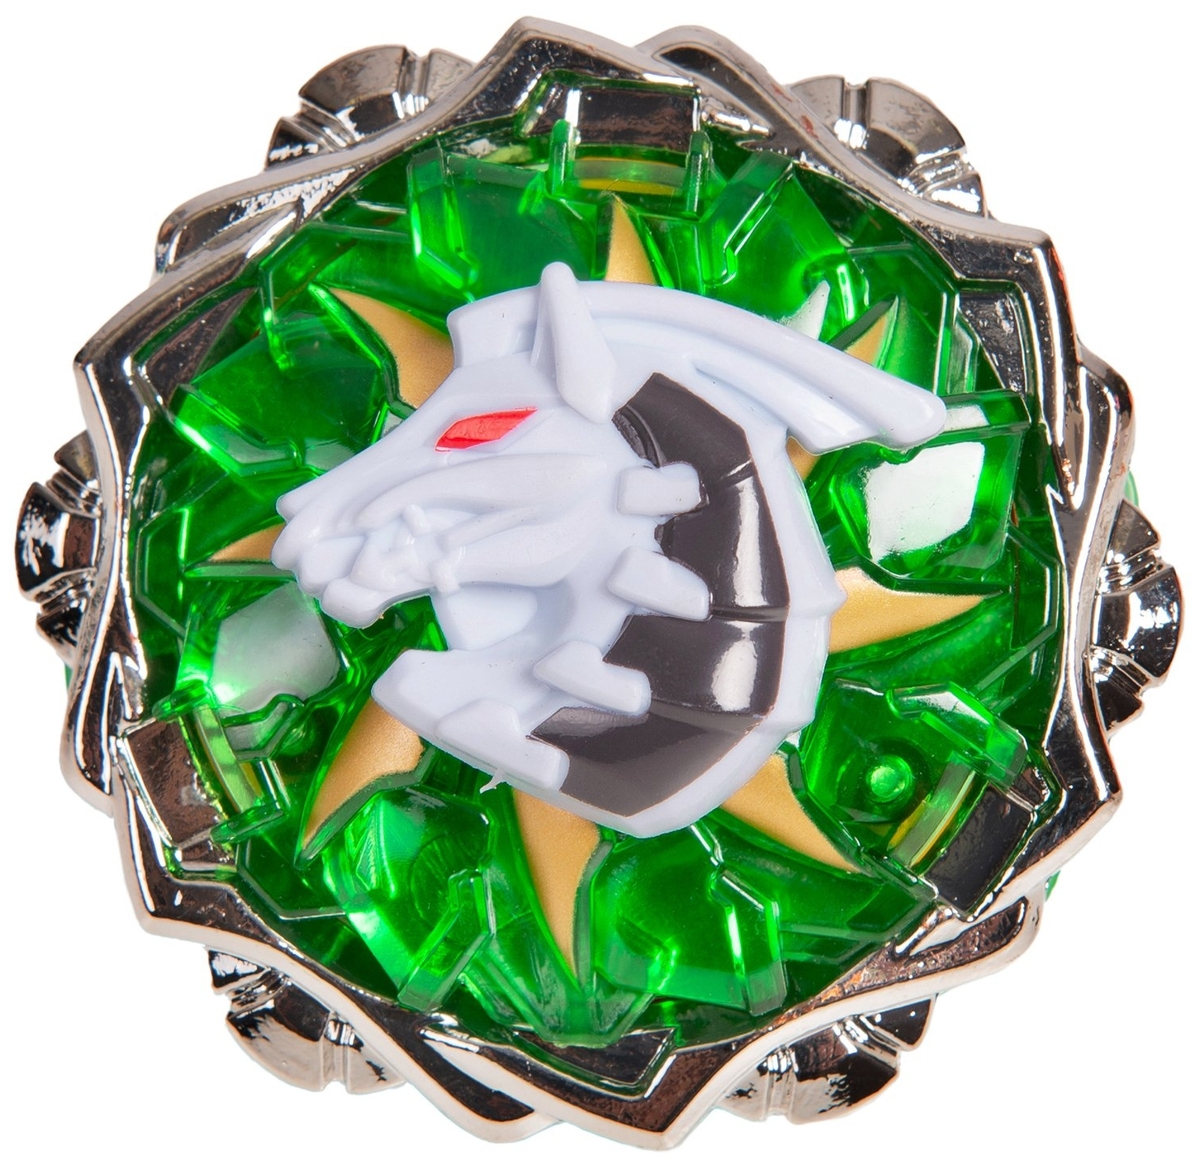 Цена Игрушка Infinity Nado Волчок Классик, Thunder Pegasus 37696